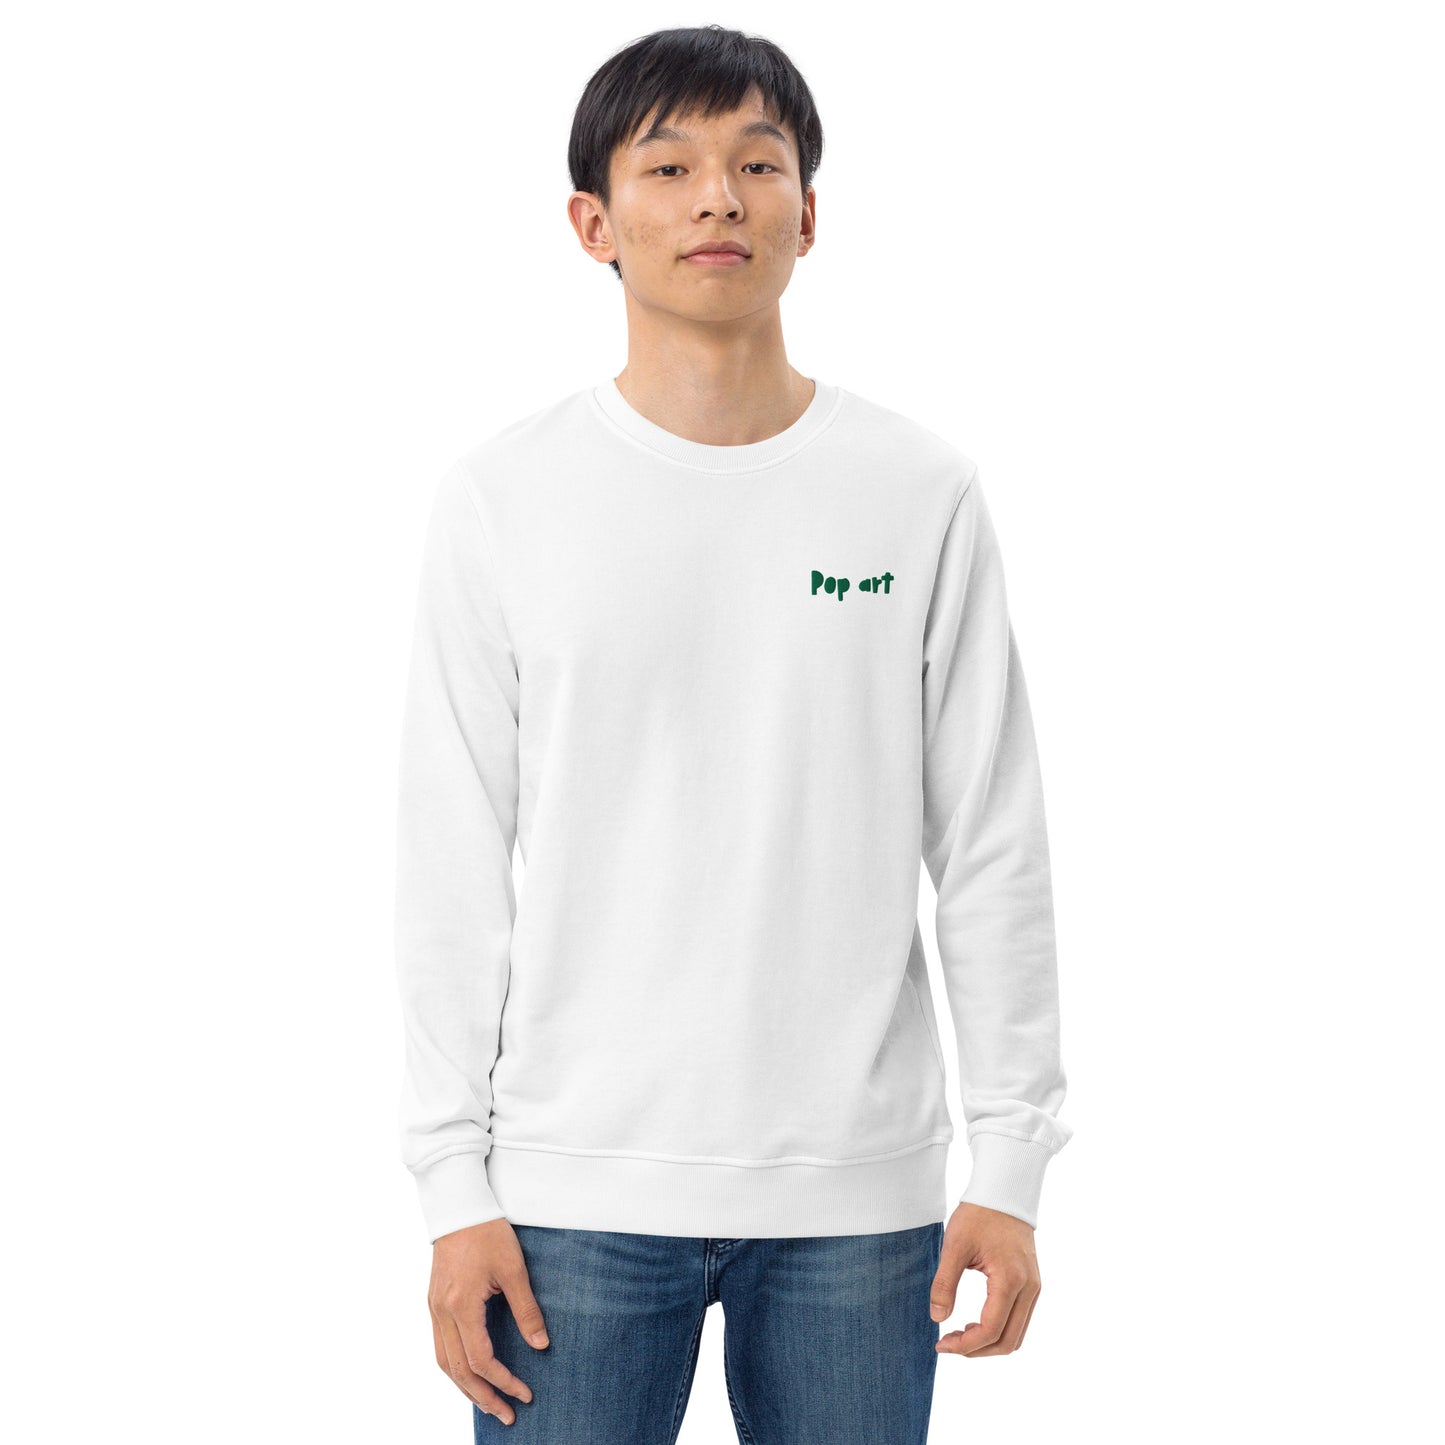 Unisex organic sweatshirt with pop art design